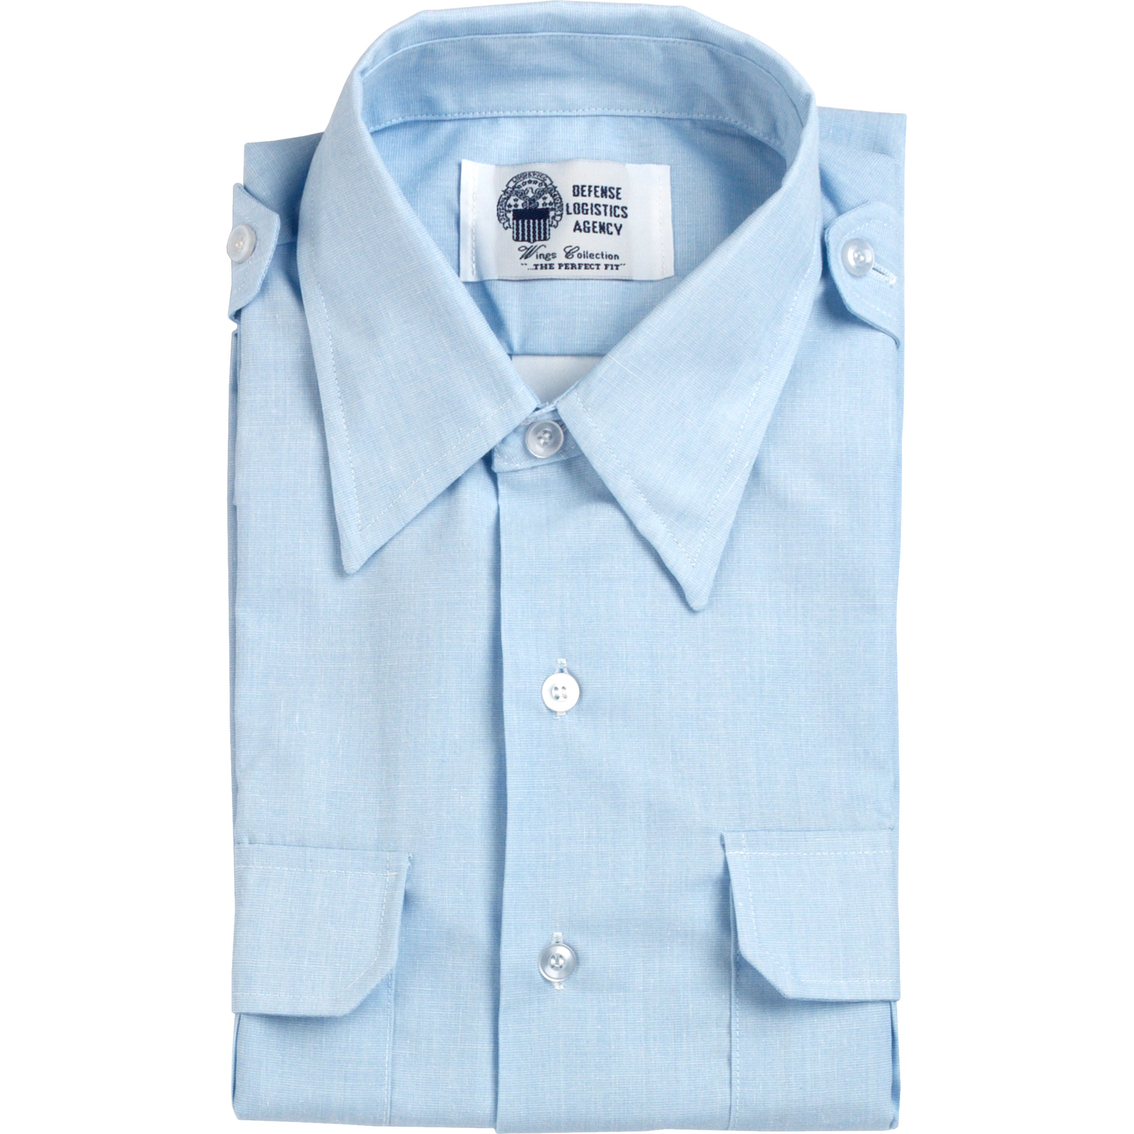 Dlats Men's Blue Short Sleeve Shirt | Shirts | Military | Shop The Exchange